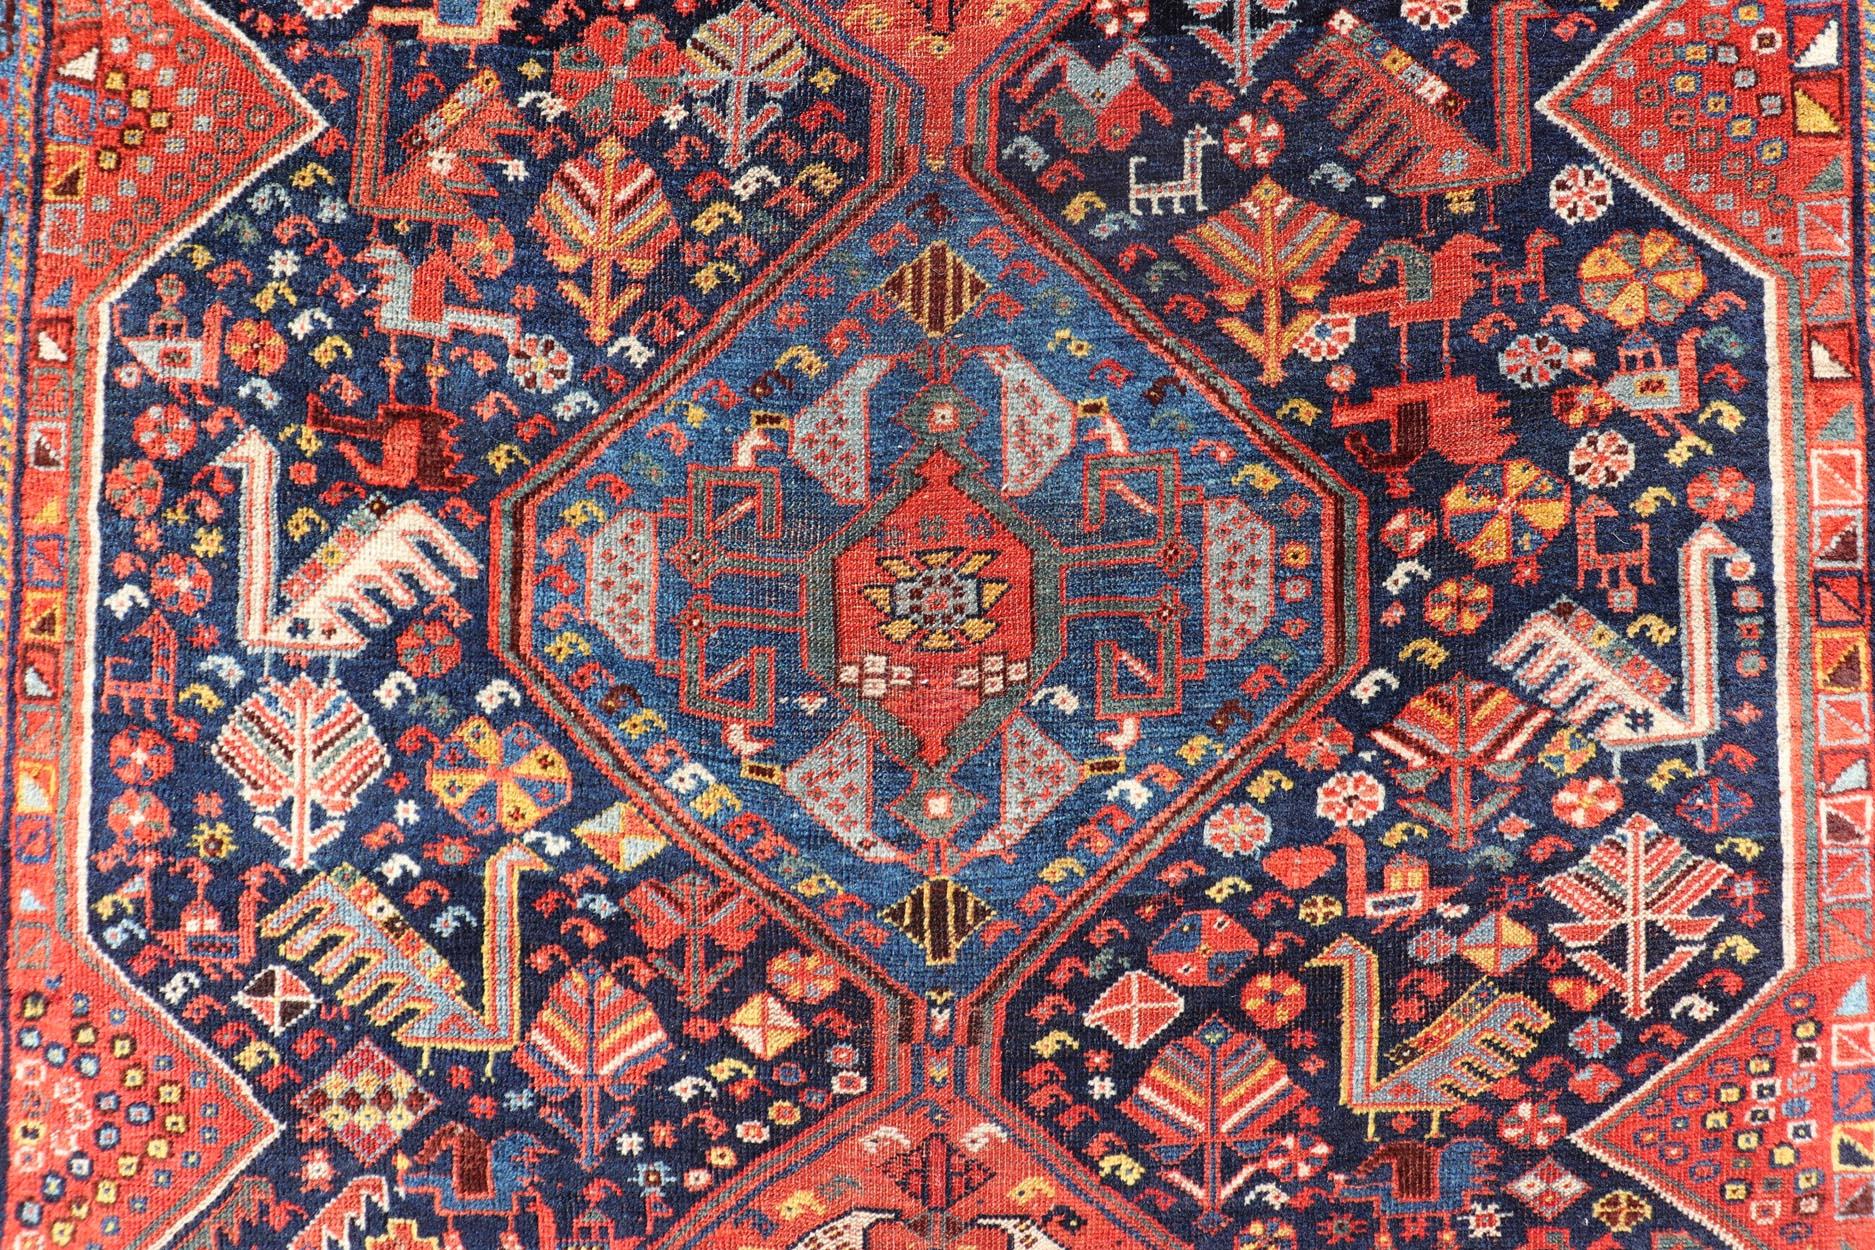 Antique Persian Qashqai Shiraz tribal rug with tribal diamond Design, 
Keivan Woven Arts / rug EMB-9688-P13531, country of origin / type: Iran / Qashqai, circa 1900. 

Measures: 5'1 x 6'2.